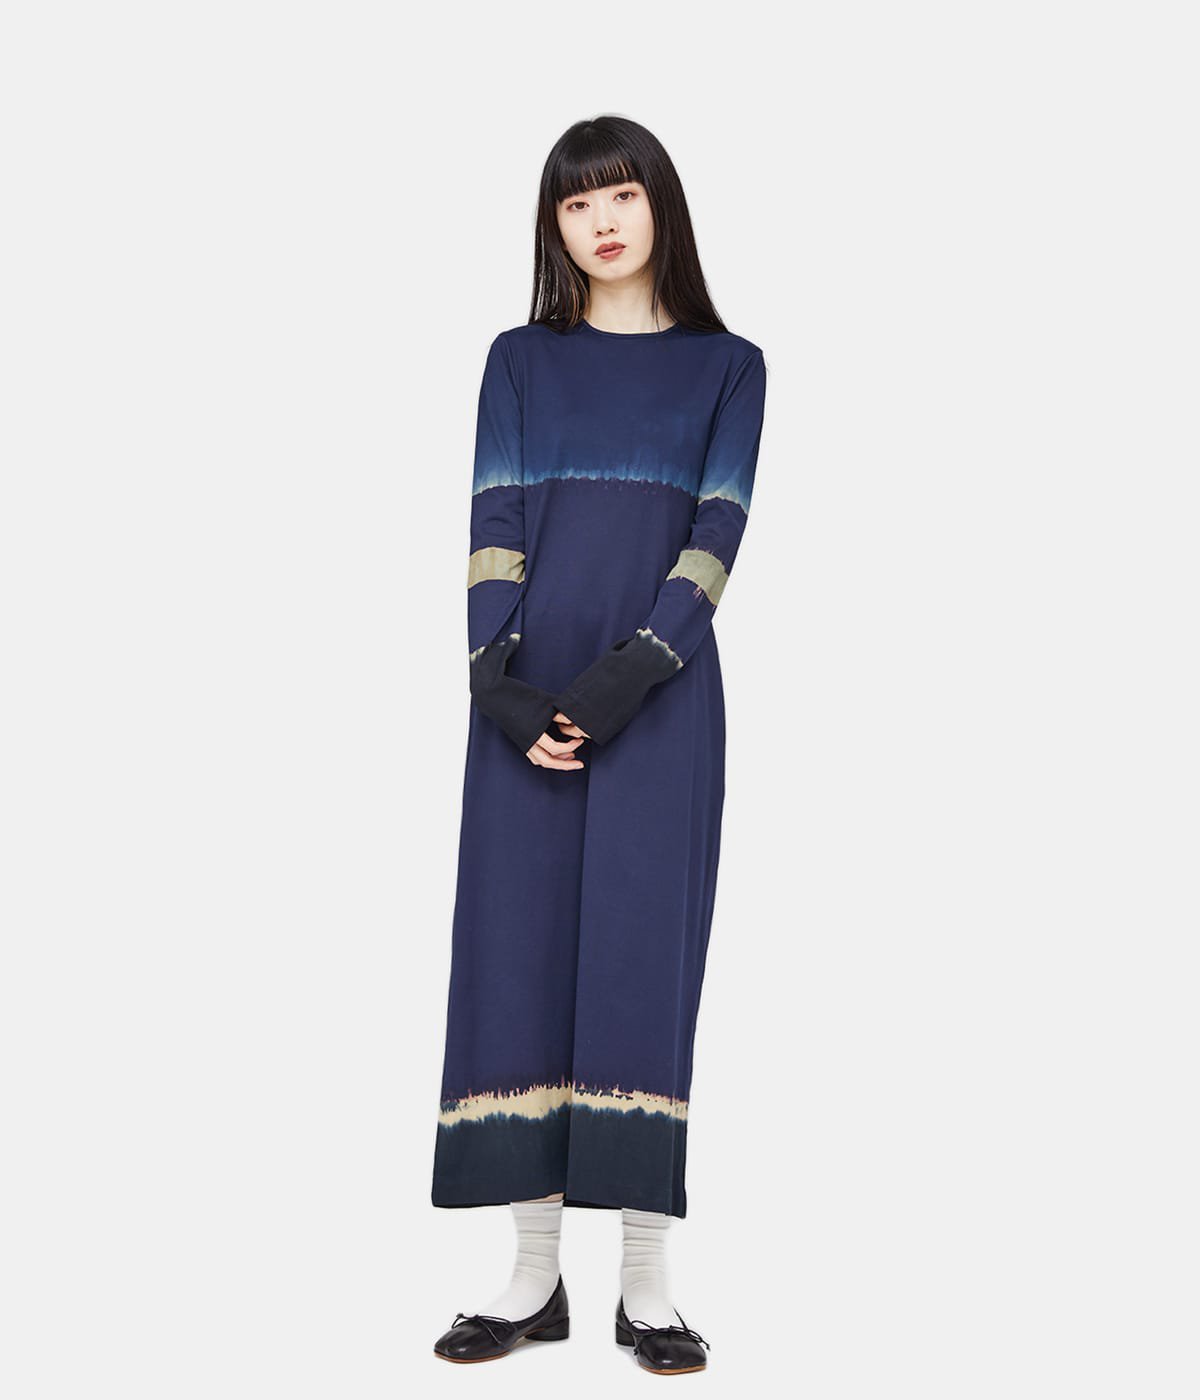 Shibori Tie-Dyed Cotton Jersey Dress マメ - ロングワンピース